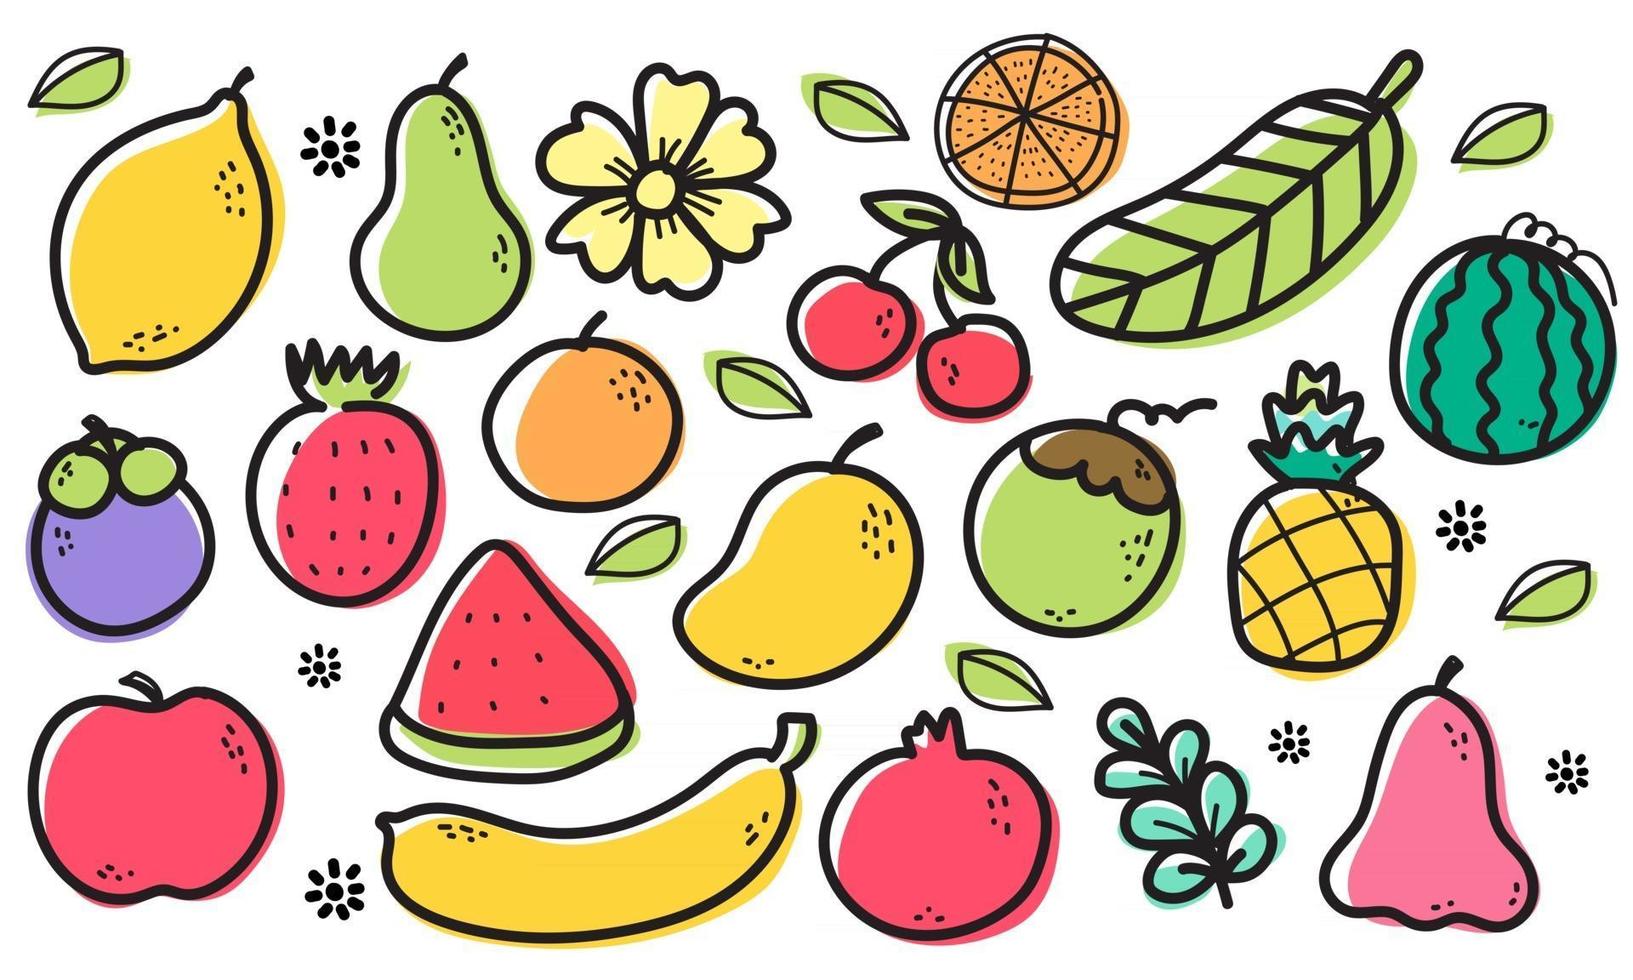 Seamless pattern  fruits, Orange, Banana, Pomegranate, Mangosteen, Strawberry, Pineapple, Watermelon, Lemon, Avocado, Coconut, Rose apple, Cherry, Apple, Flower and Leaf on white background. vector